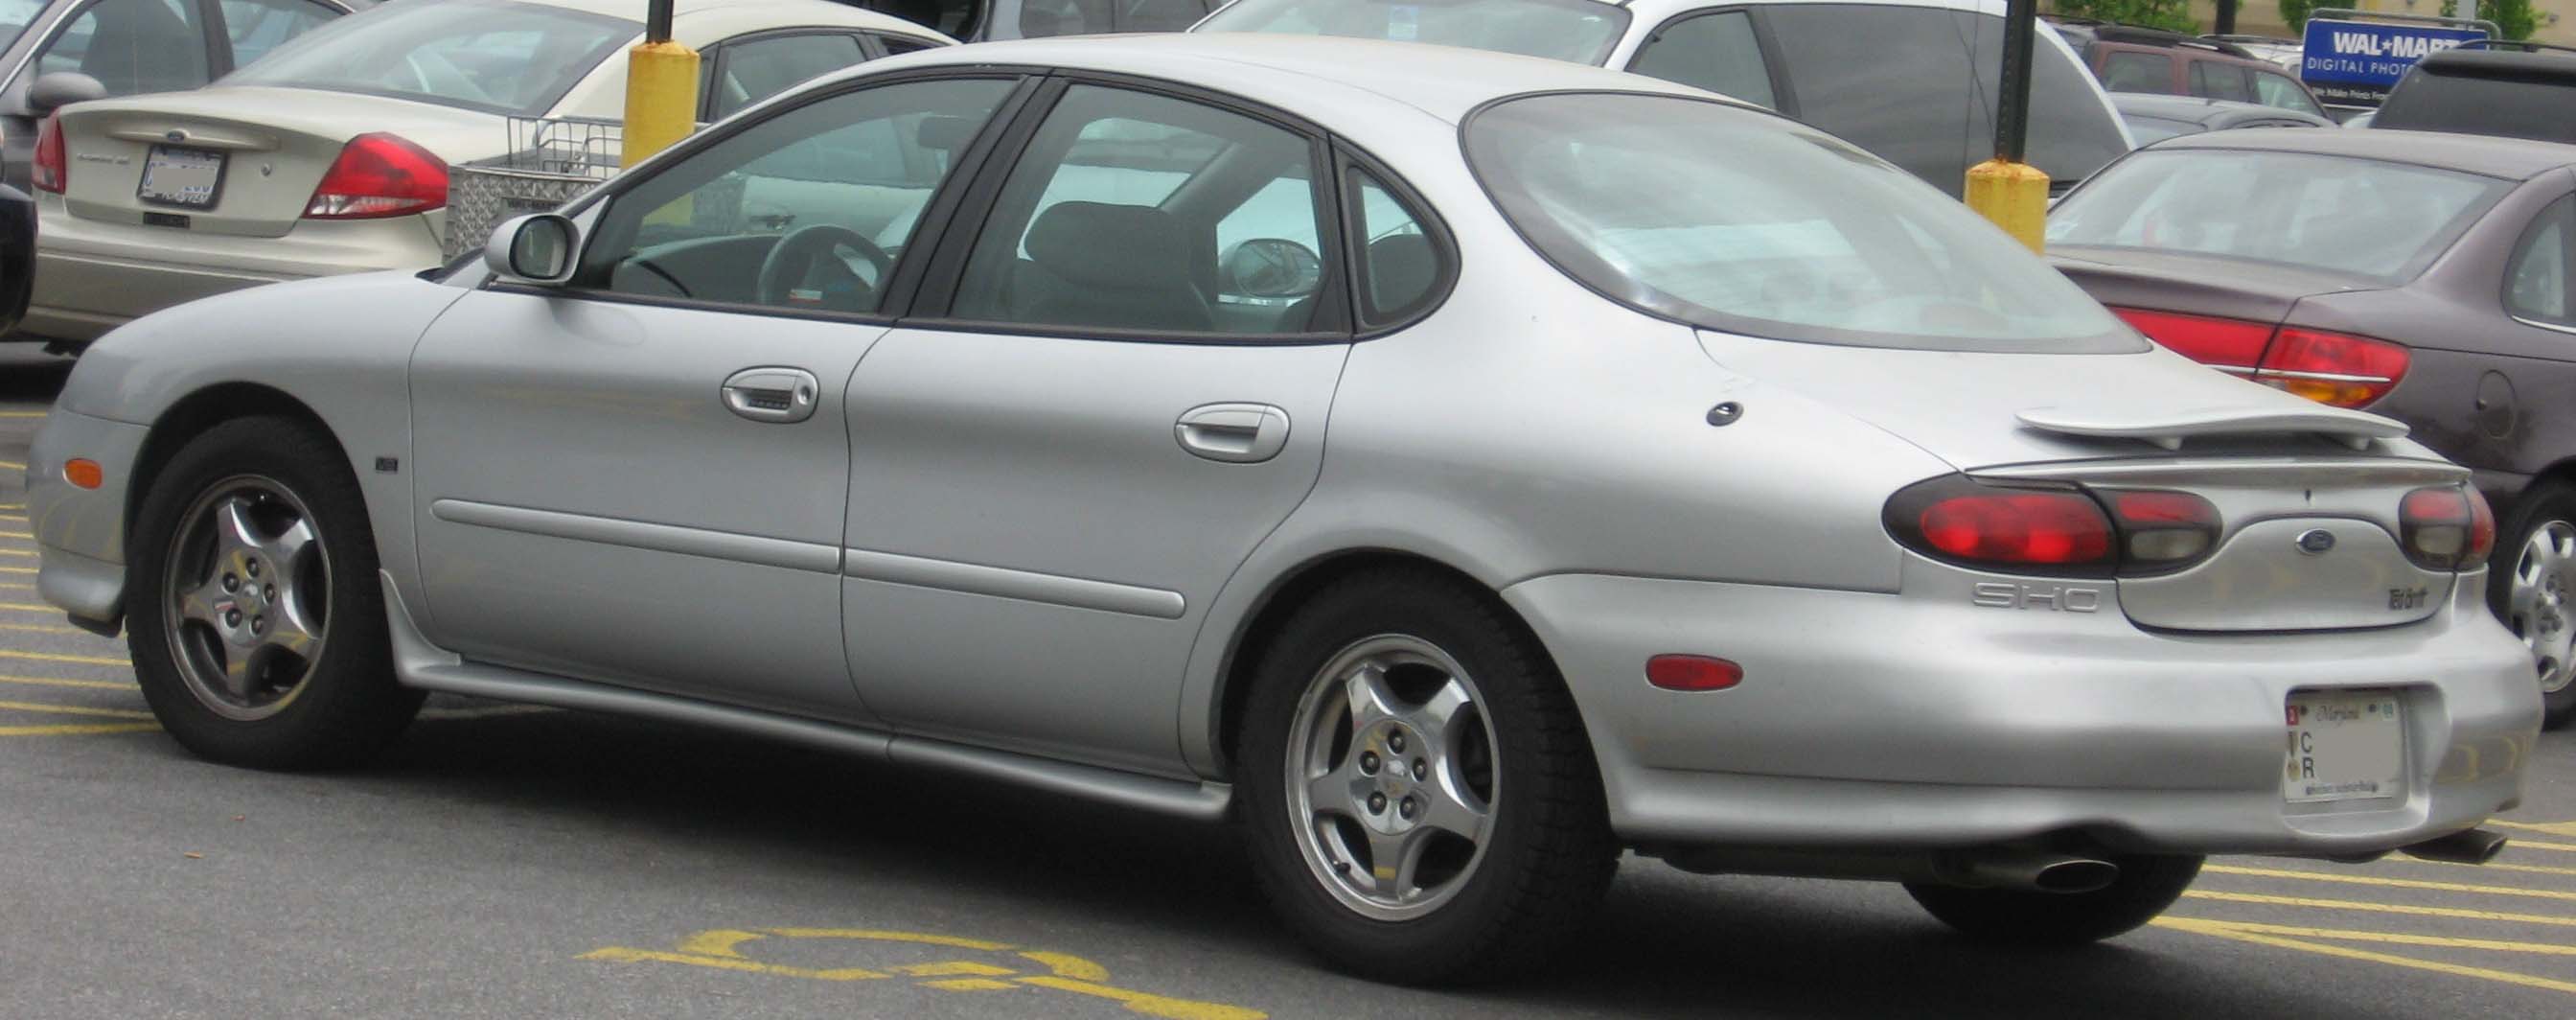 File:1996-1999 Ford Taurus SHO rear.jpg - Wikimedia Commons